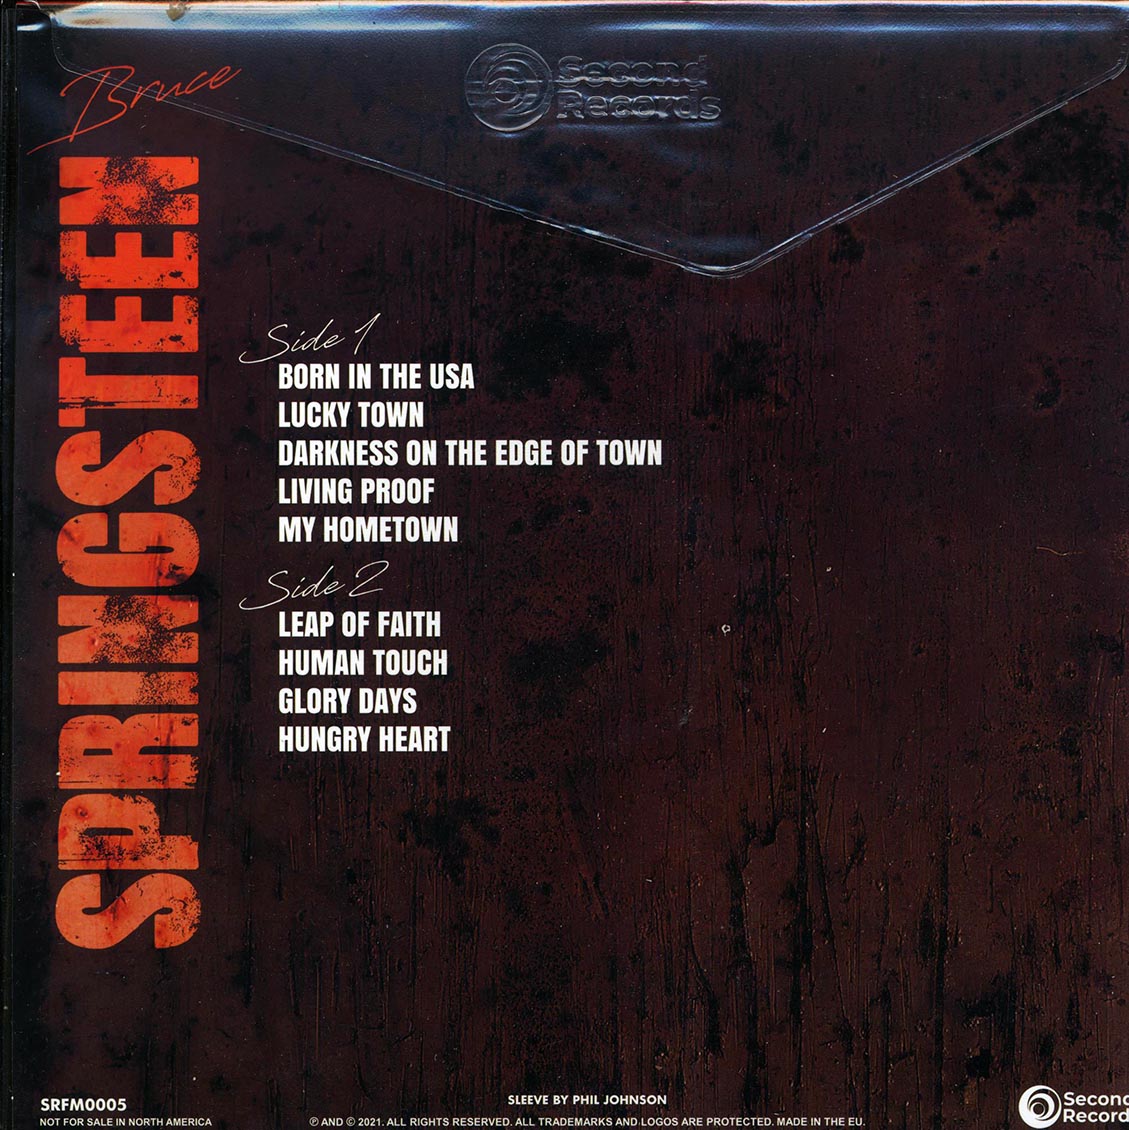 Bruce Springsteen - Live In Hollywood: Hollywood Center Studios, 5th June 1992 (180g) (clear vinyl) - Vinyl LP, LP